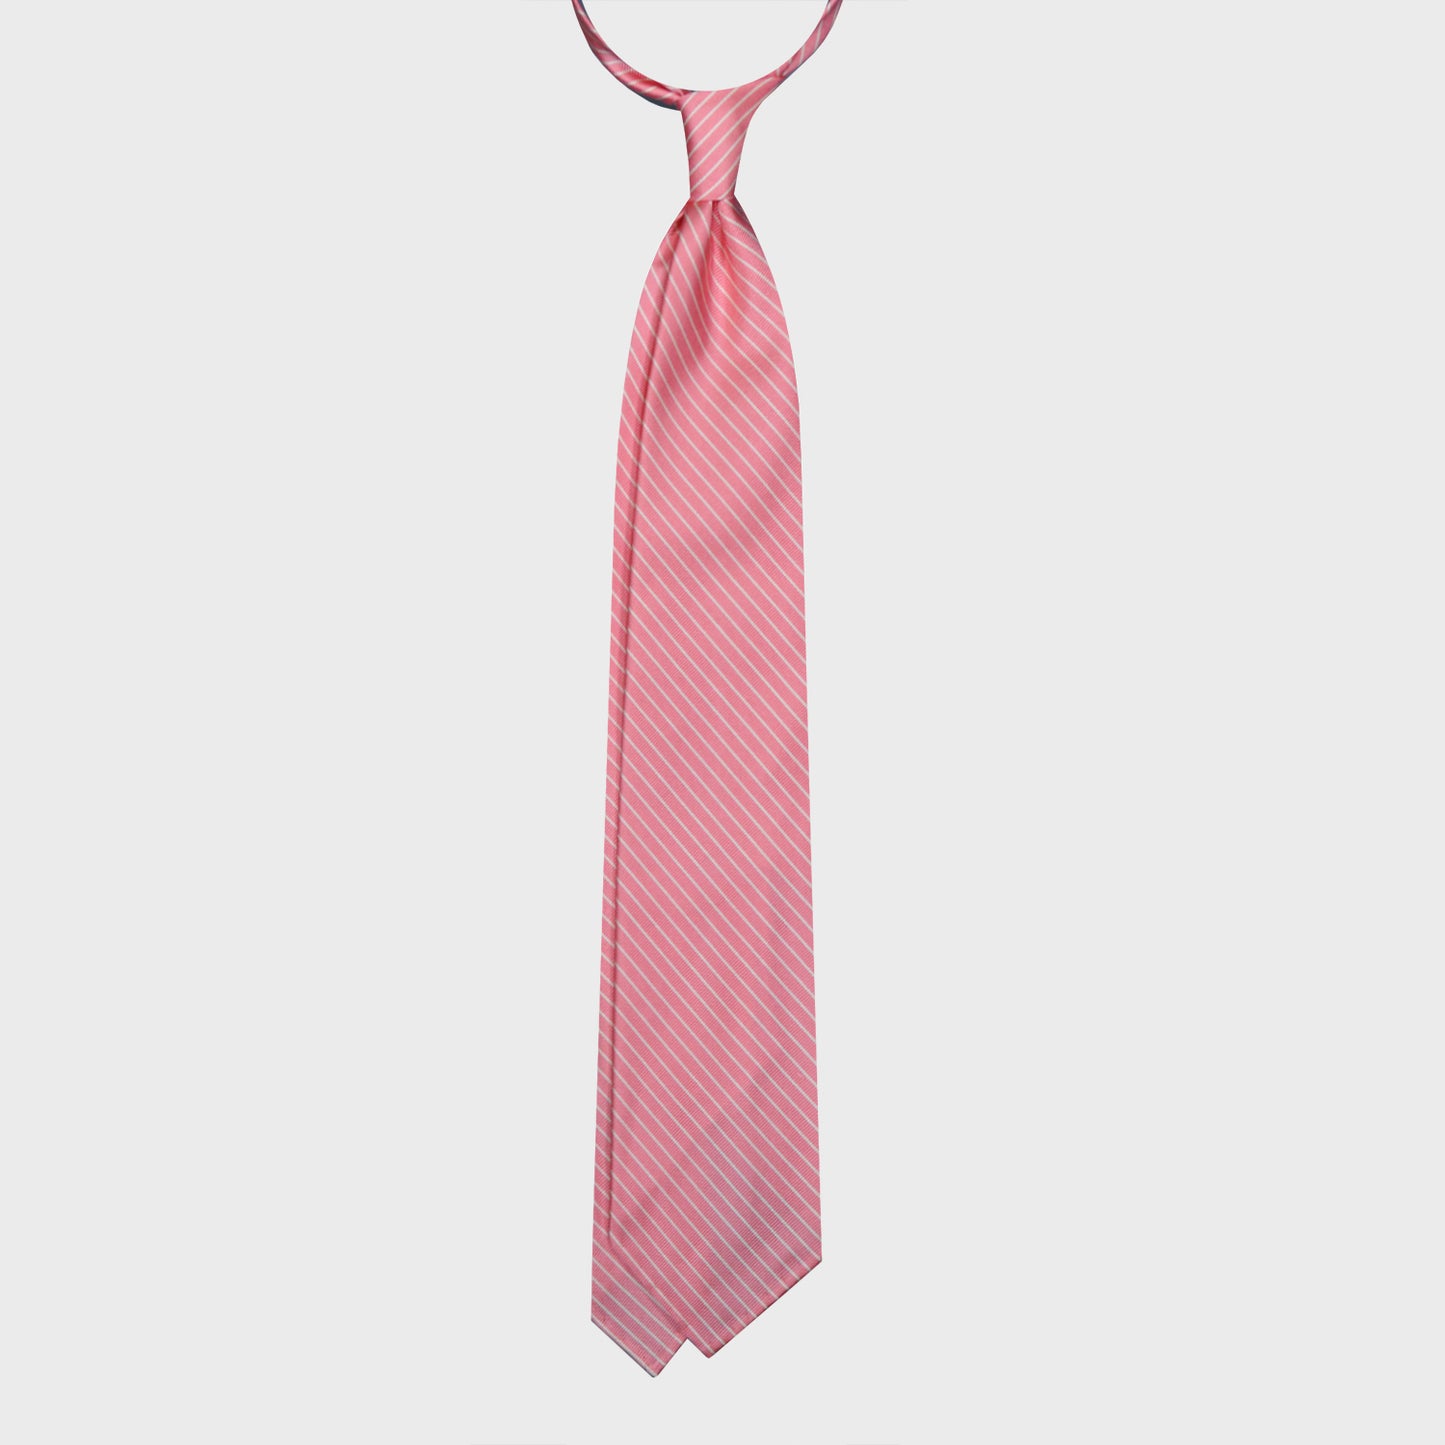 F.Marino Stripes Jacquard Silk Tie 3 Folds Pink-Wools Boutique Uomo